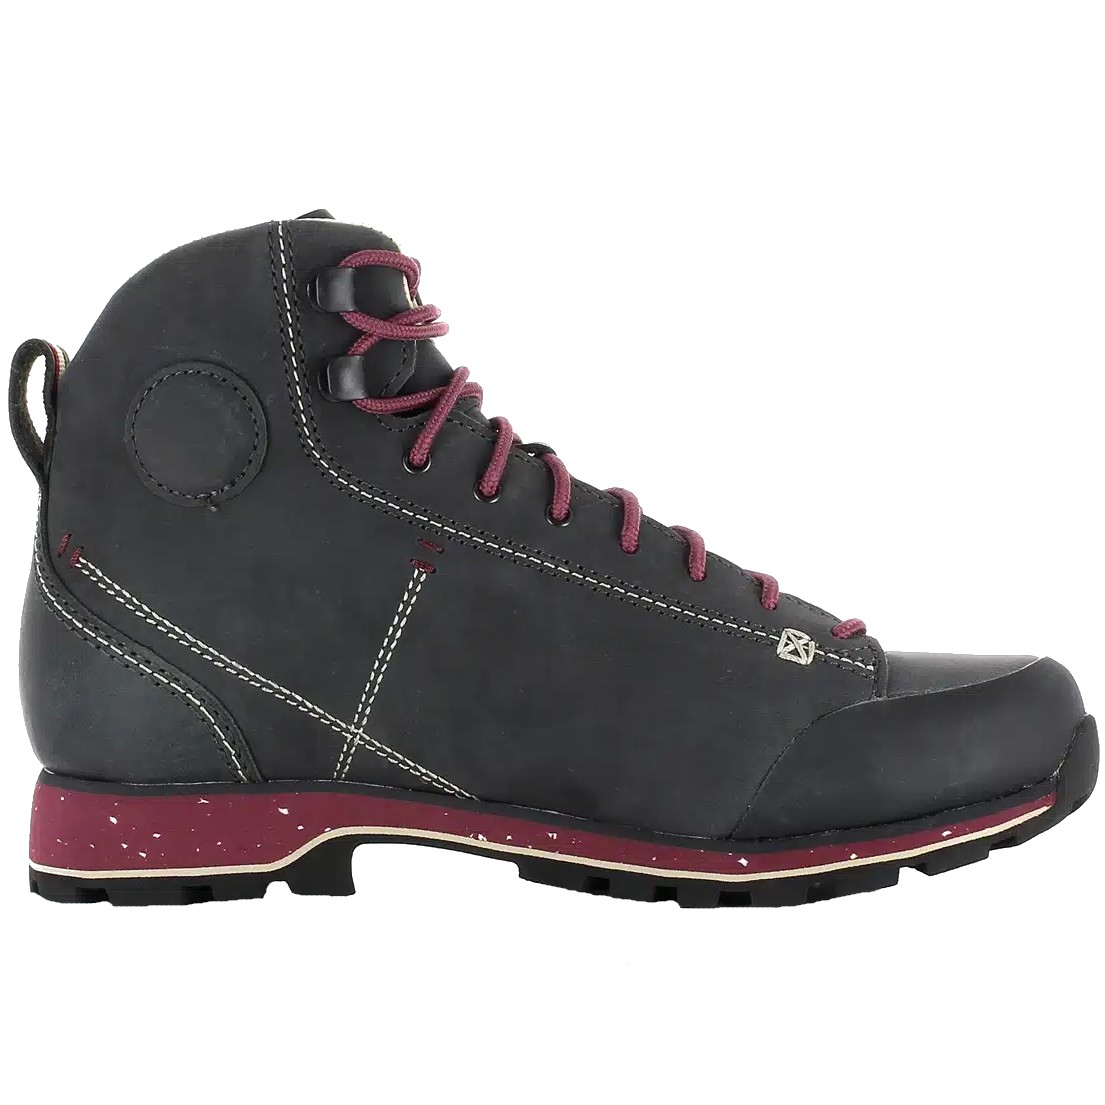 Dolomite 54 High FG Evo GTX Women's Walking Shoes